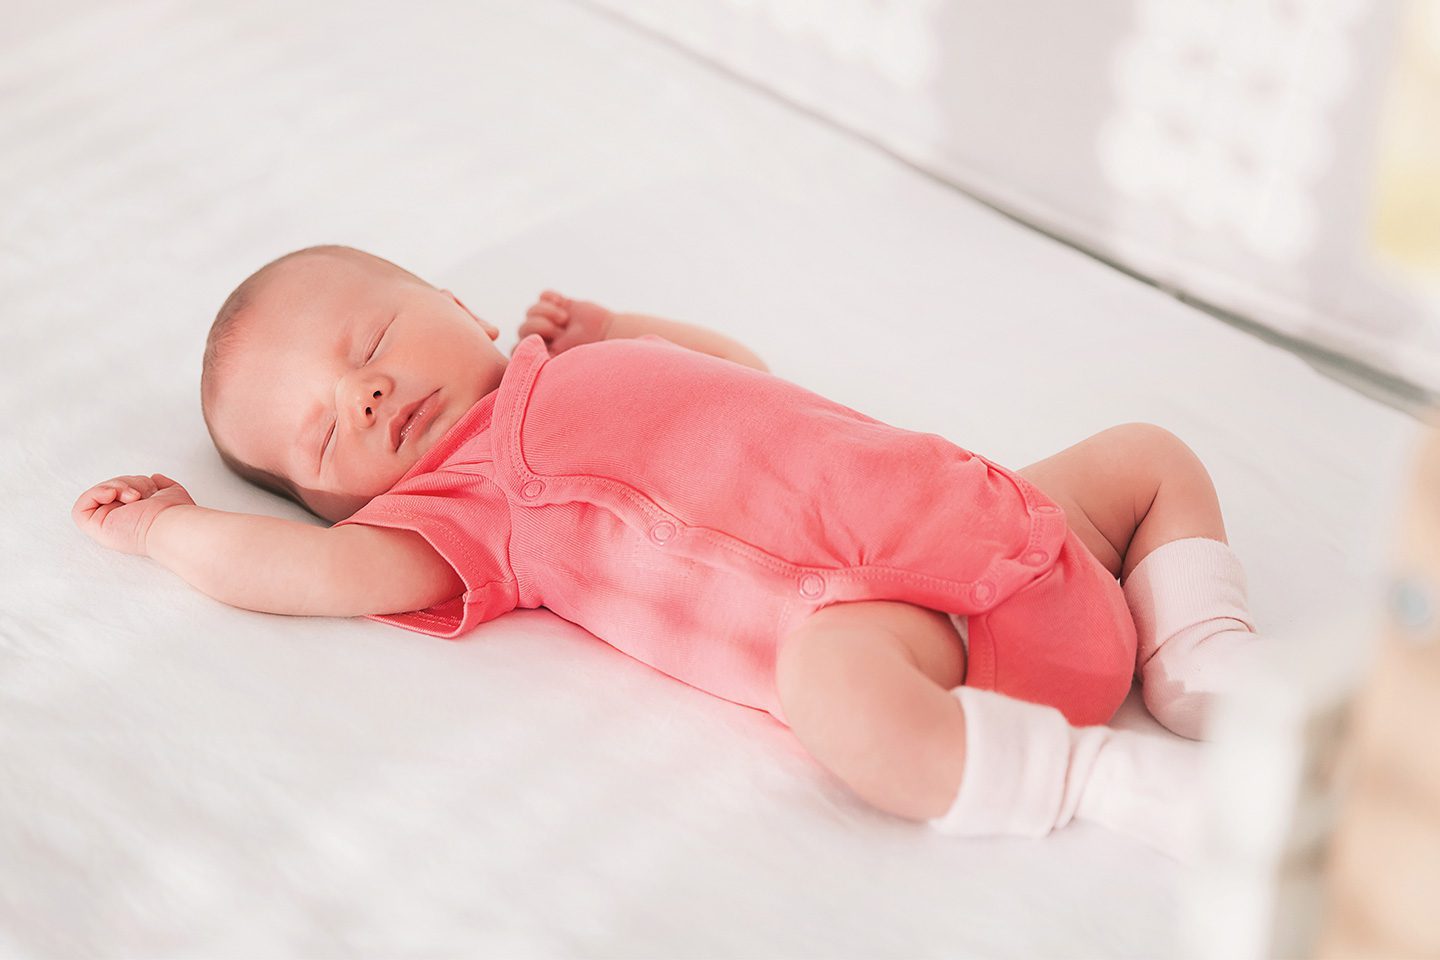 Sleeping baby in crib, safe sleep practices